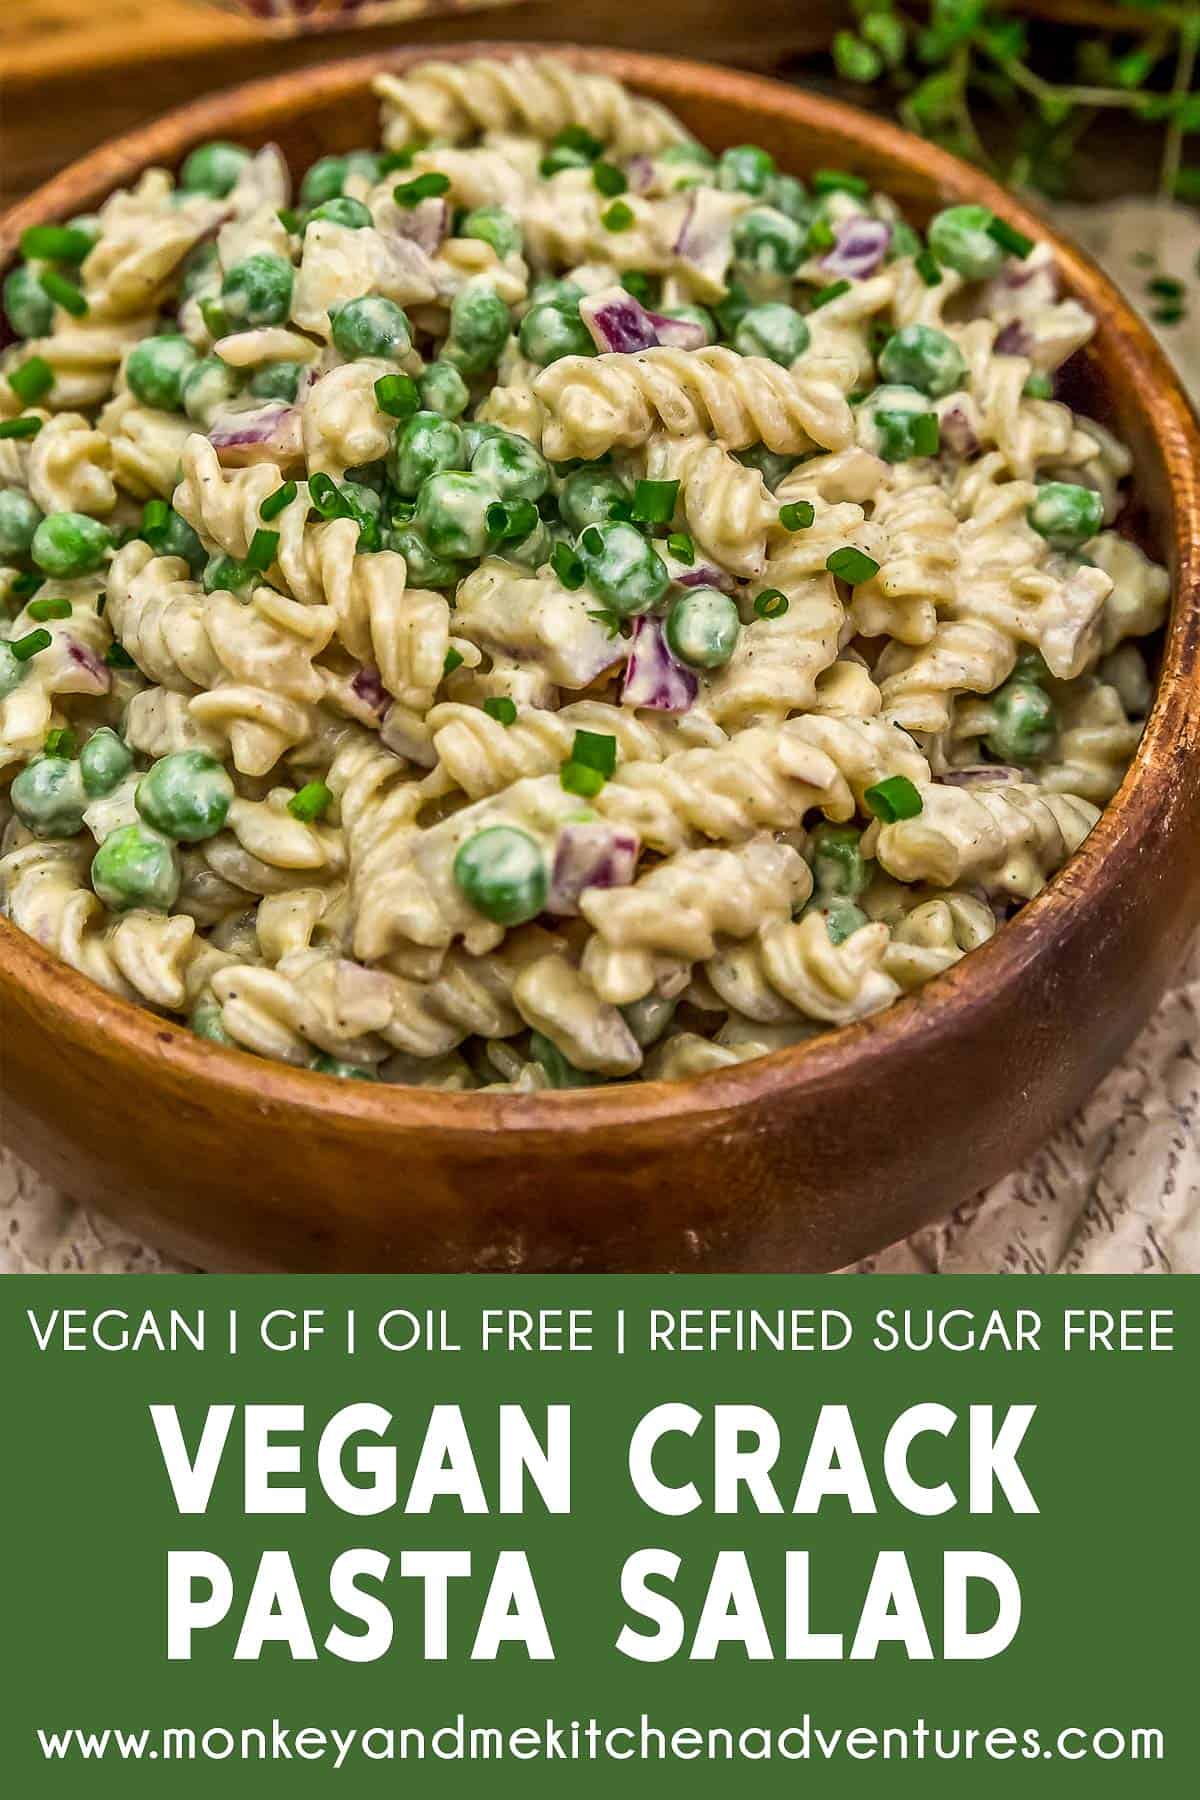 Vegan Crack Pasta Salad with text description